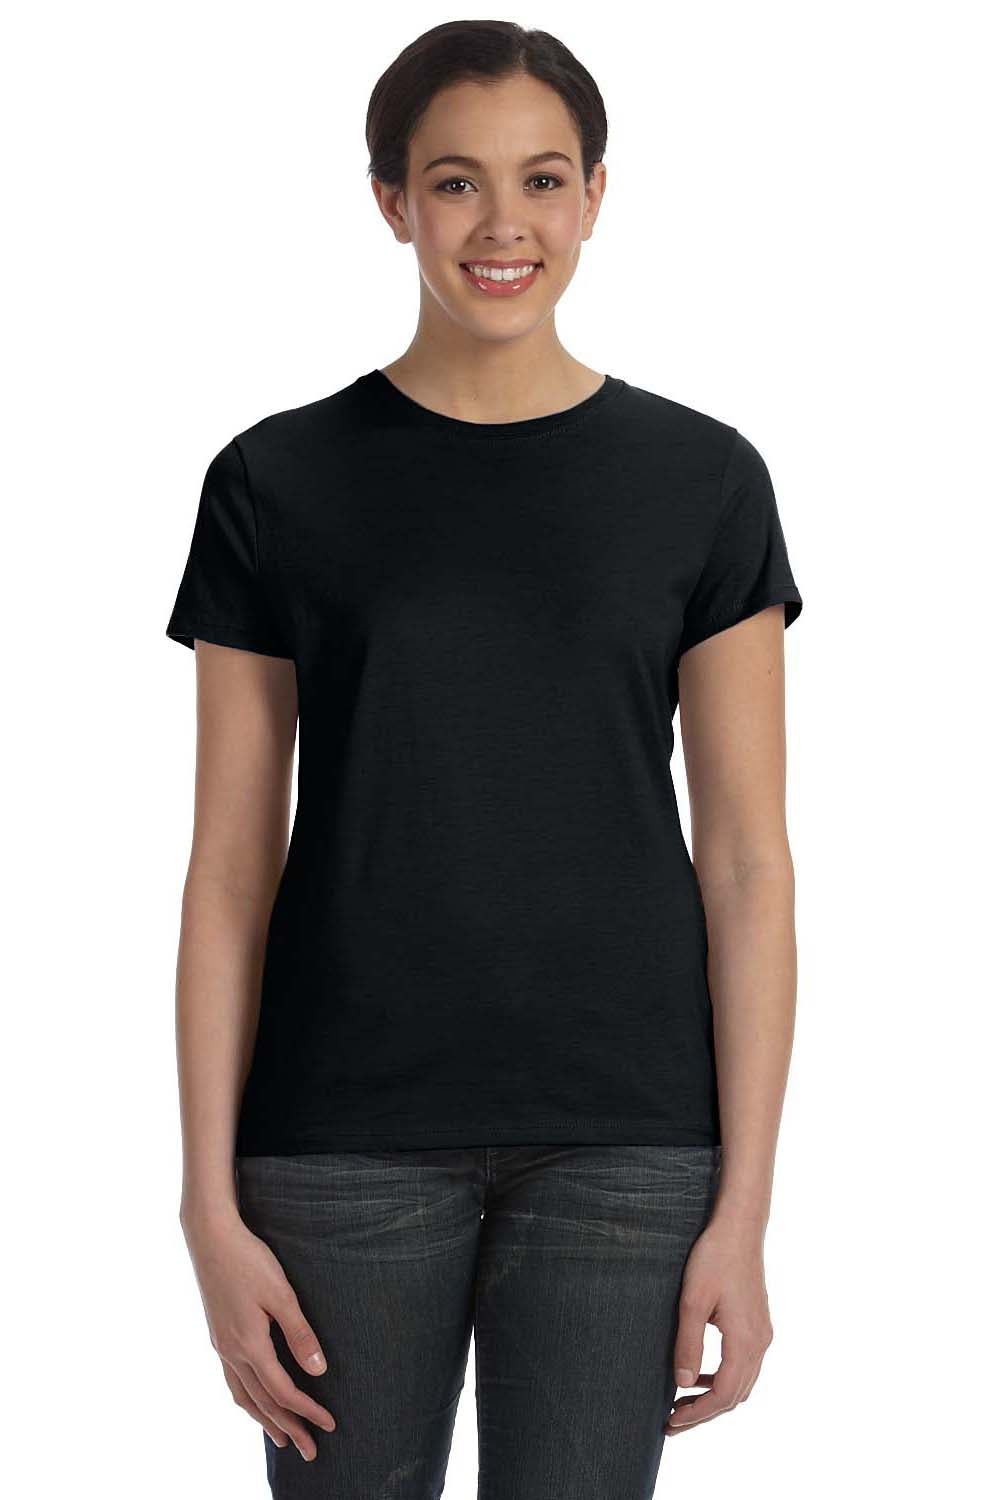 Hanes SL04 Womens Nano-T Short Sleeve Crewneck T-Shirt Black Front